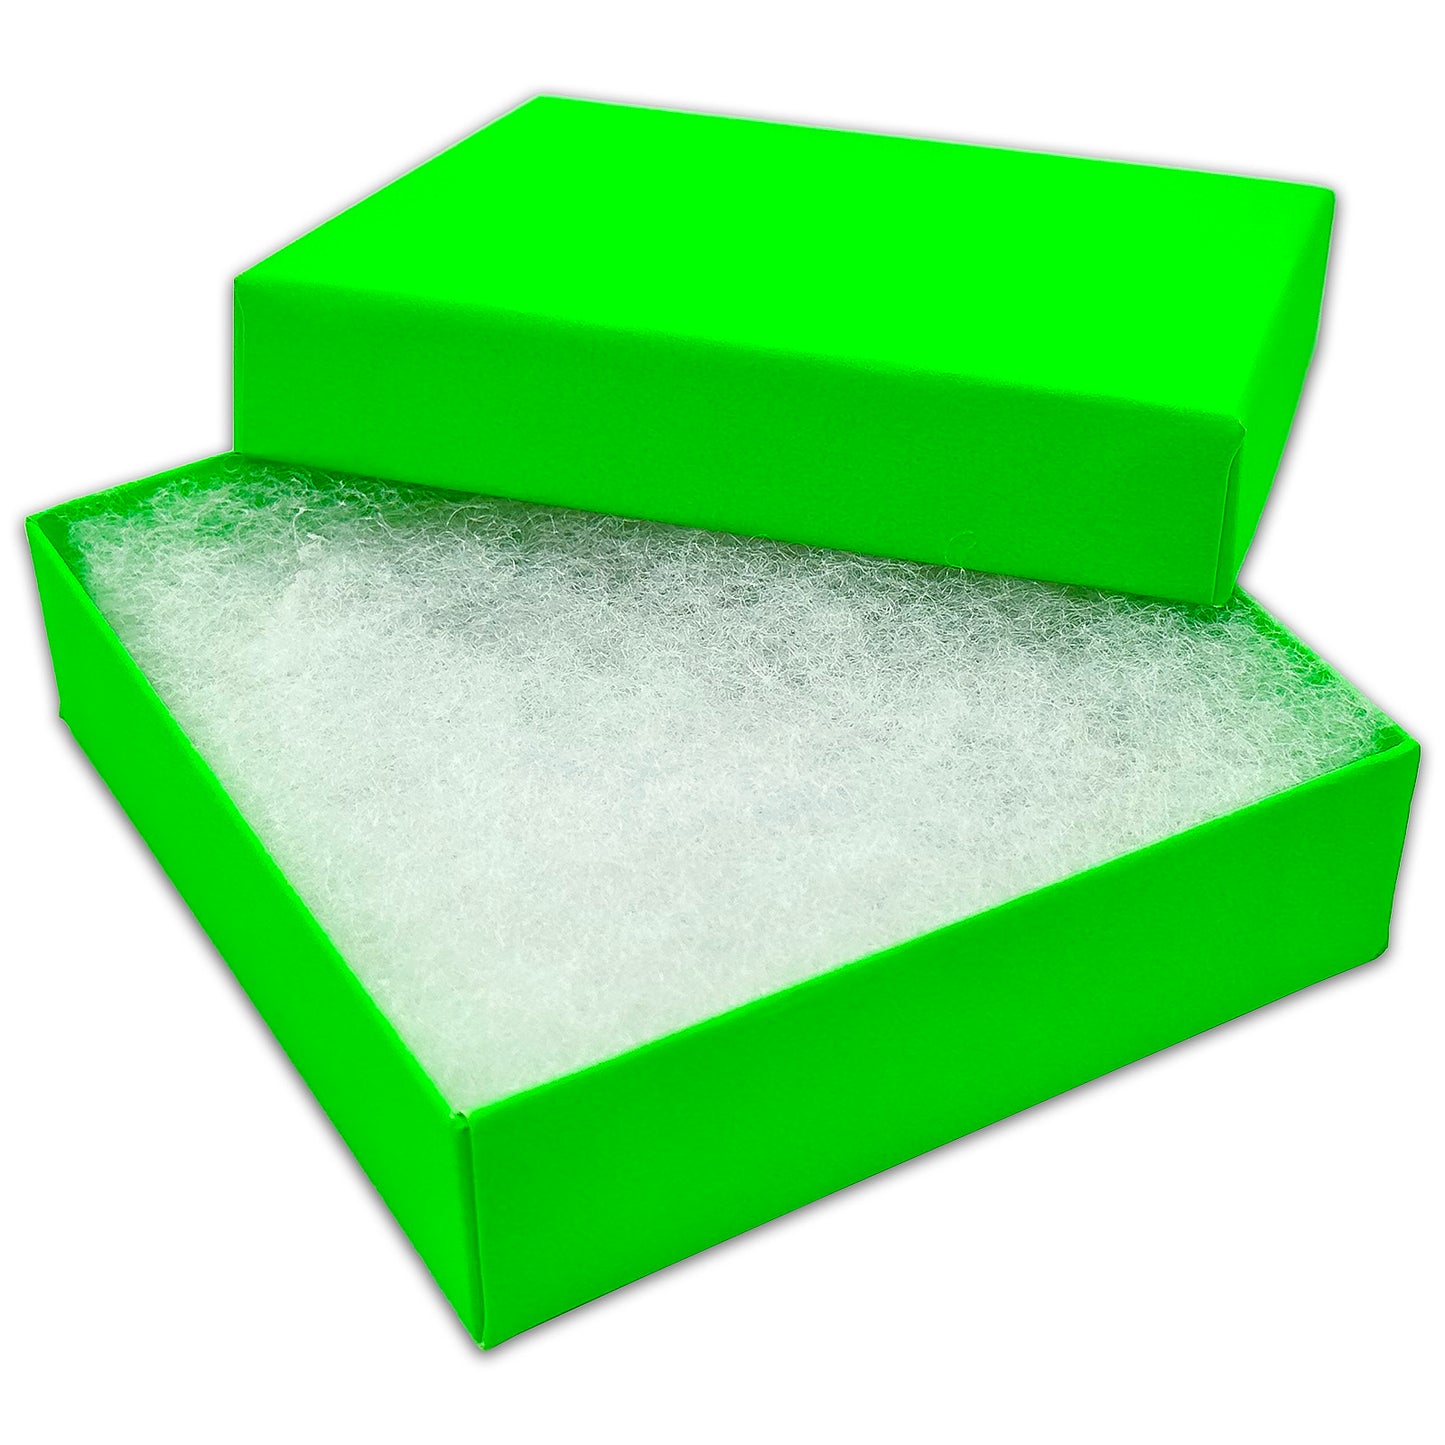 3 1/2" x 3 1/2" x 1" Neon Green Cotton Filled Paper Box